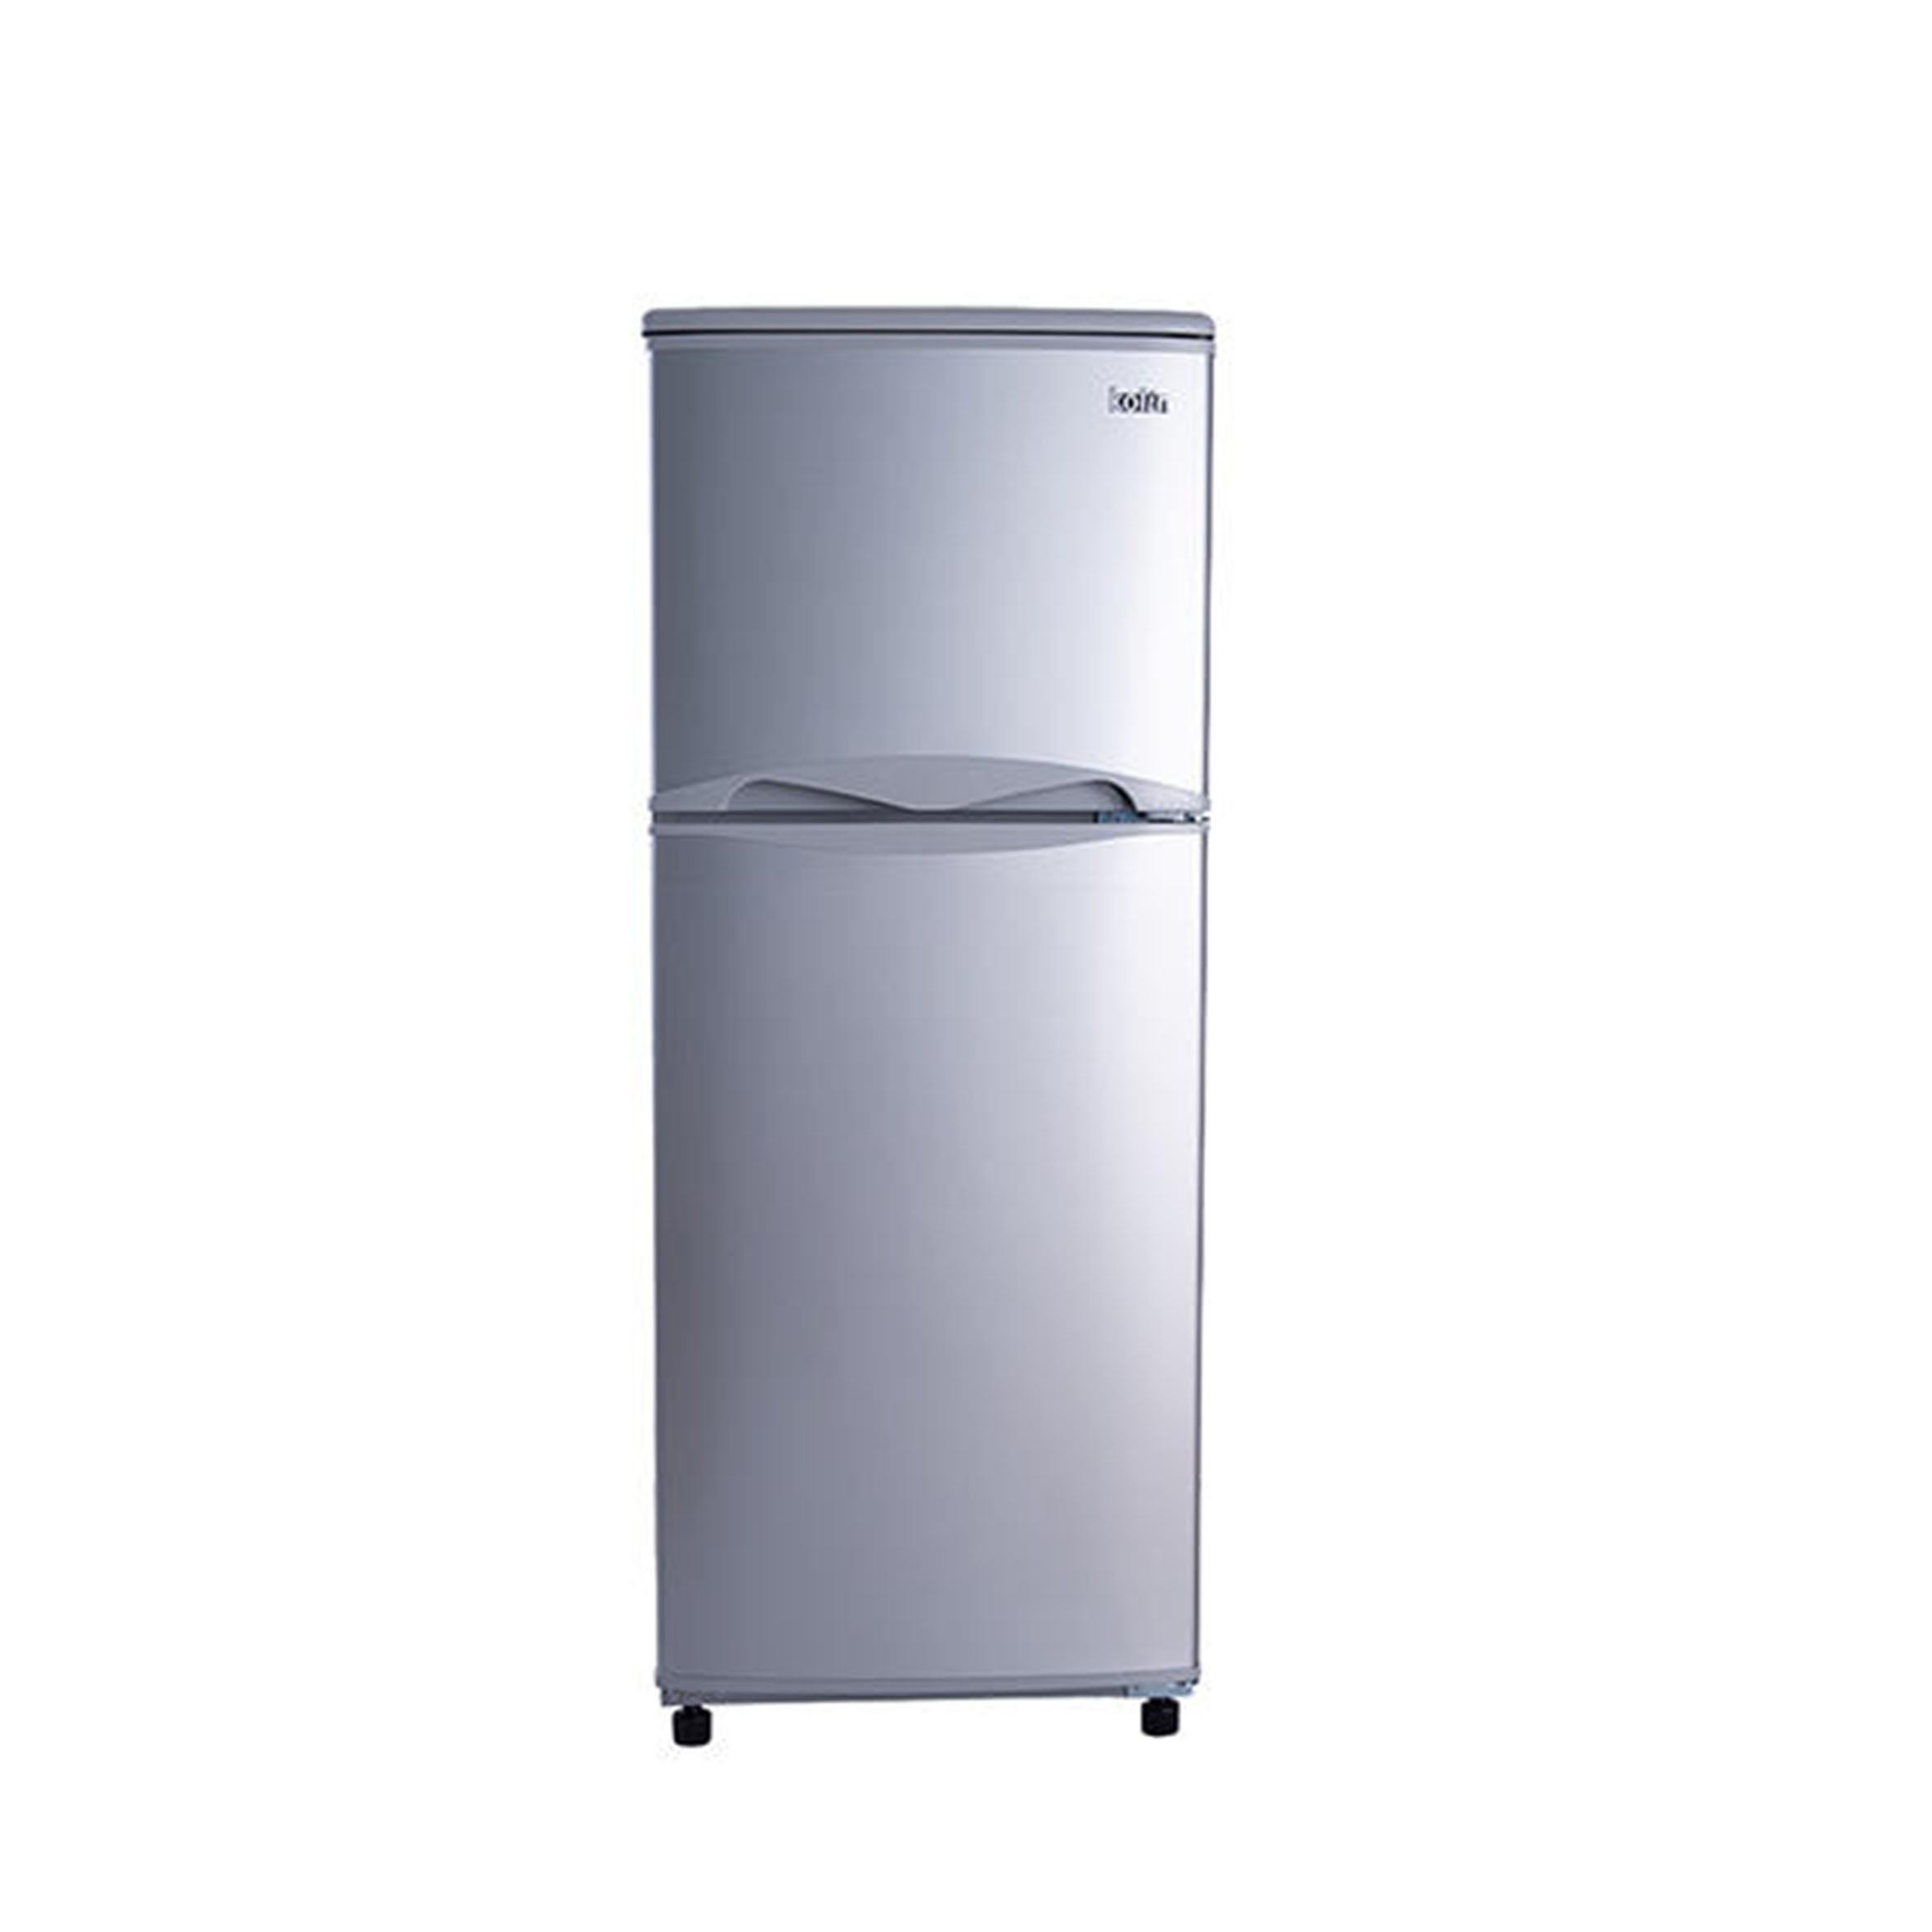 Kolin 歌林 125公升二級能效精緻雙門冰箱(KR-213S03) 無卡分期